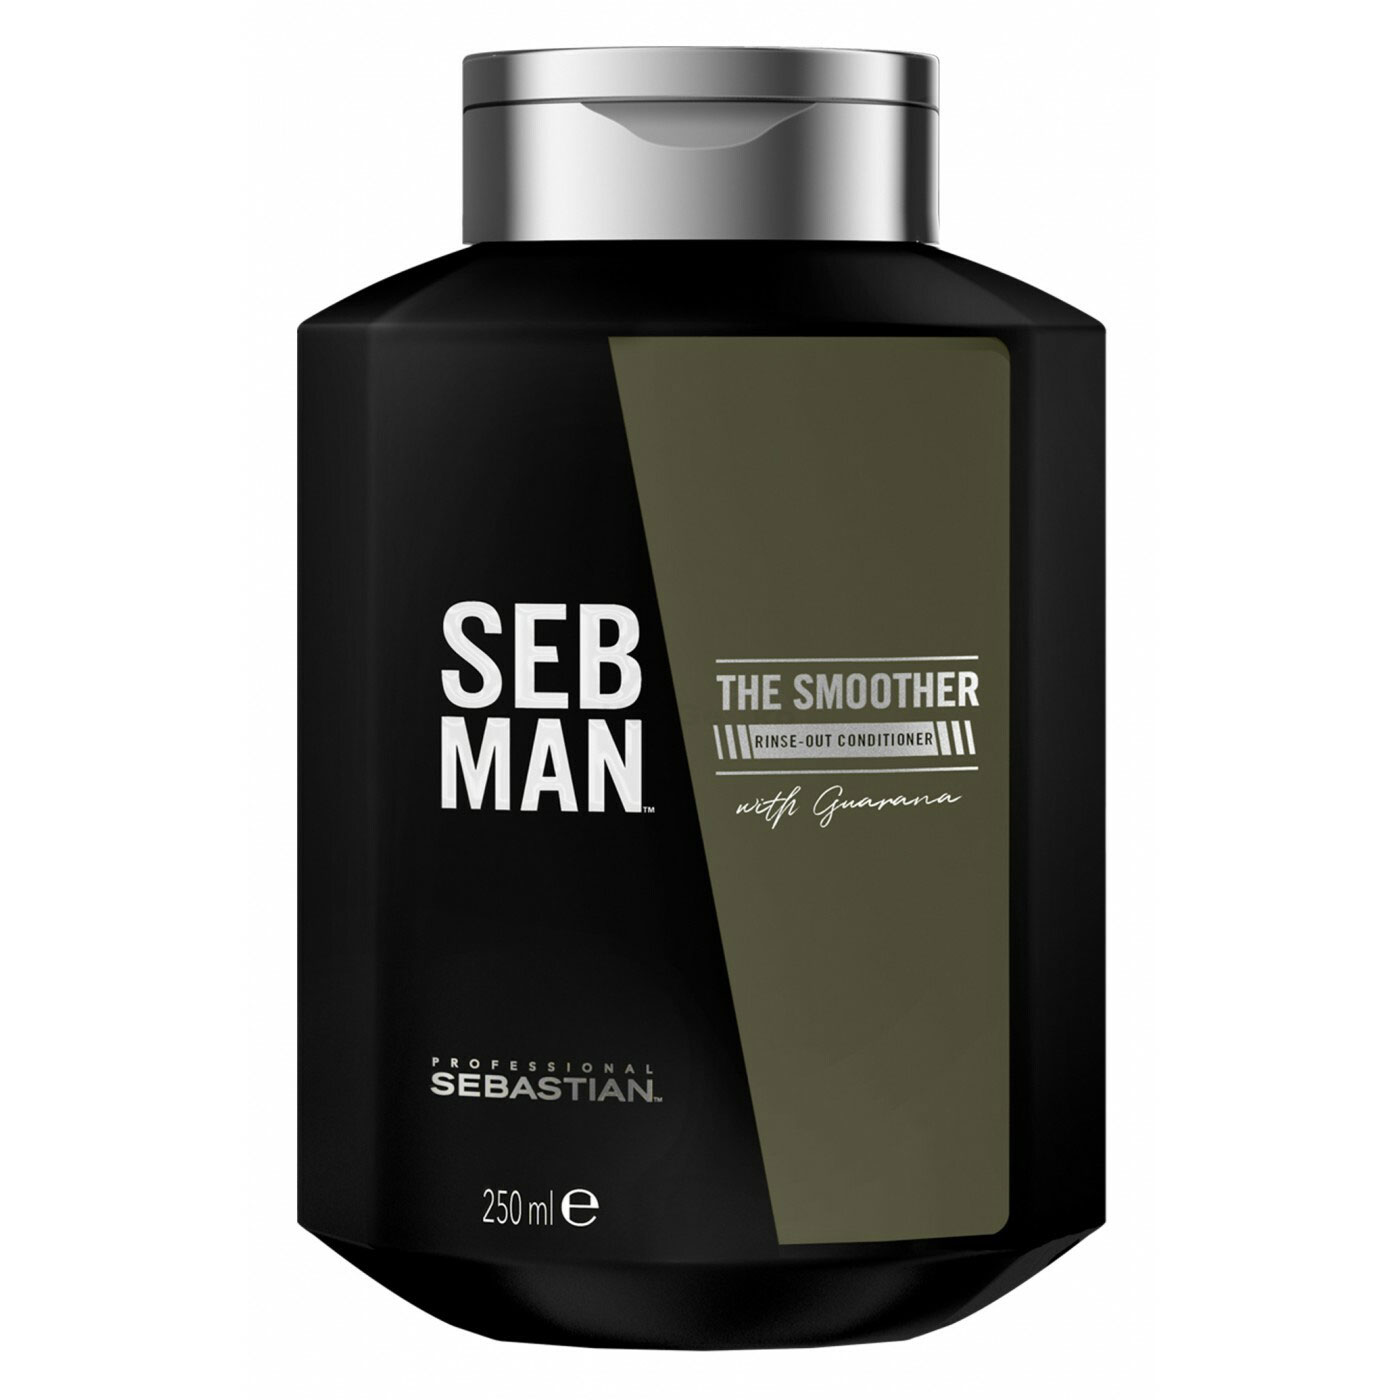 Sebastian SEB MAN The Smoother Feuchtigkeitsspendender Conditioner 250ml